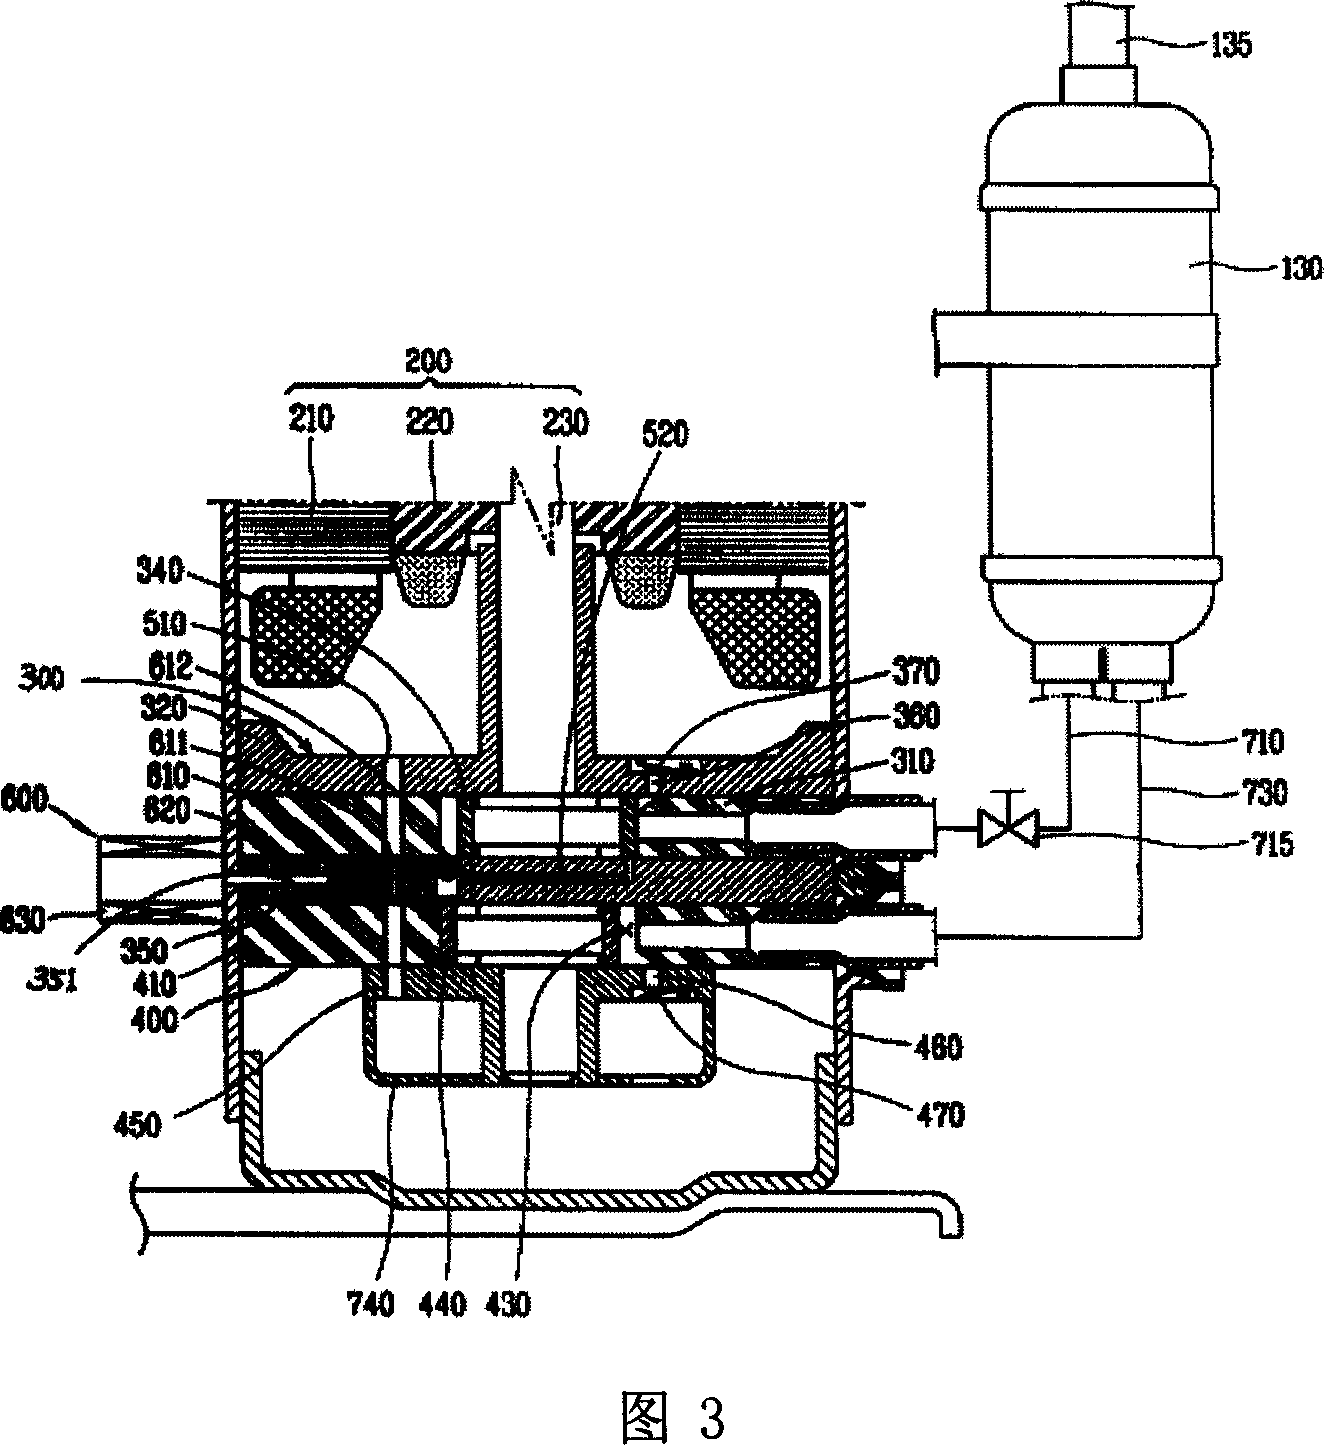 Multi-stage rotary compressor